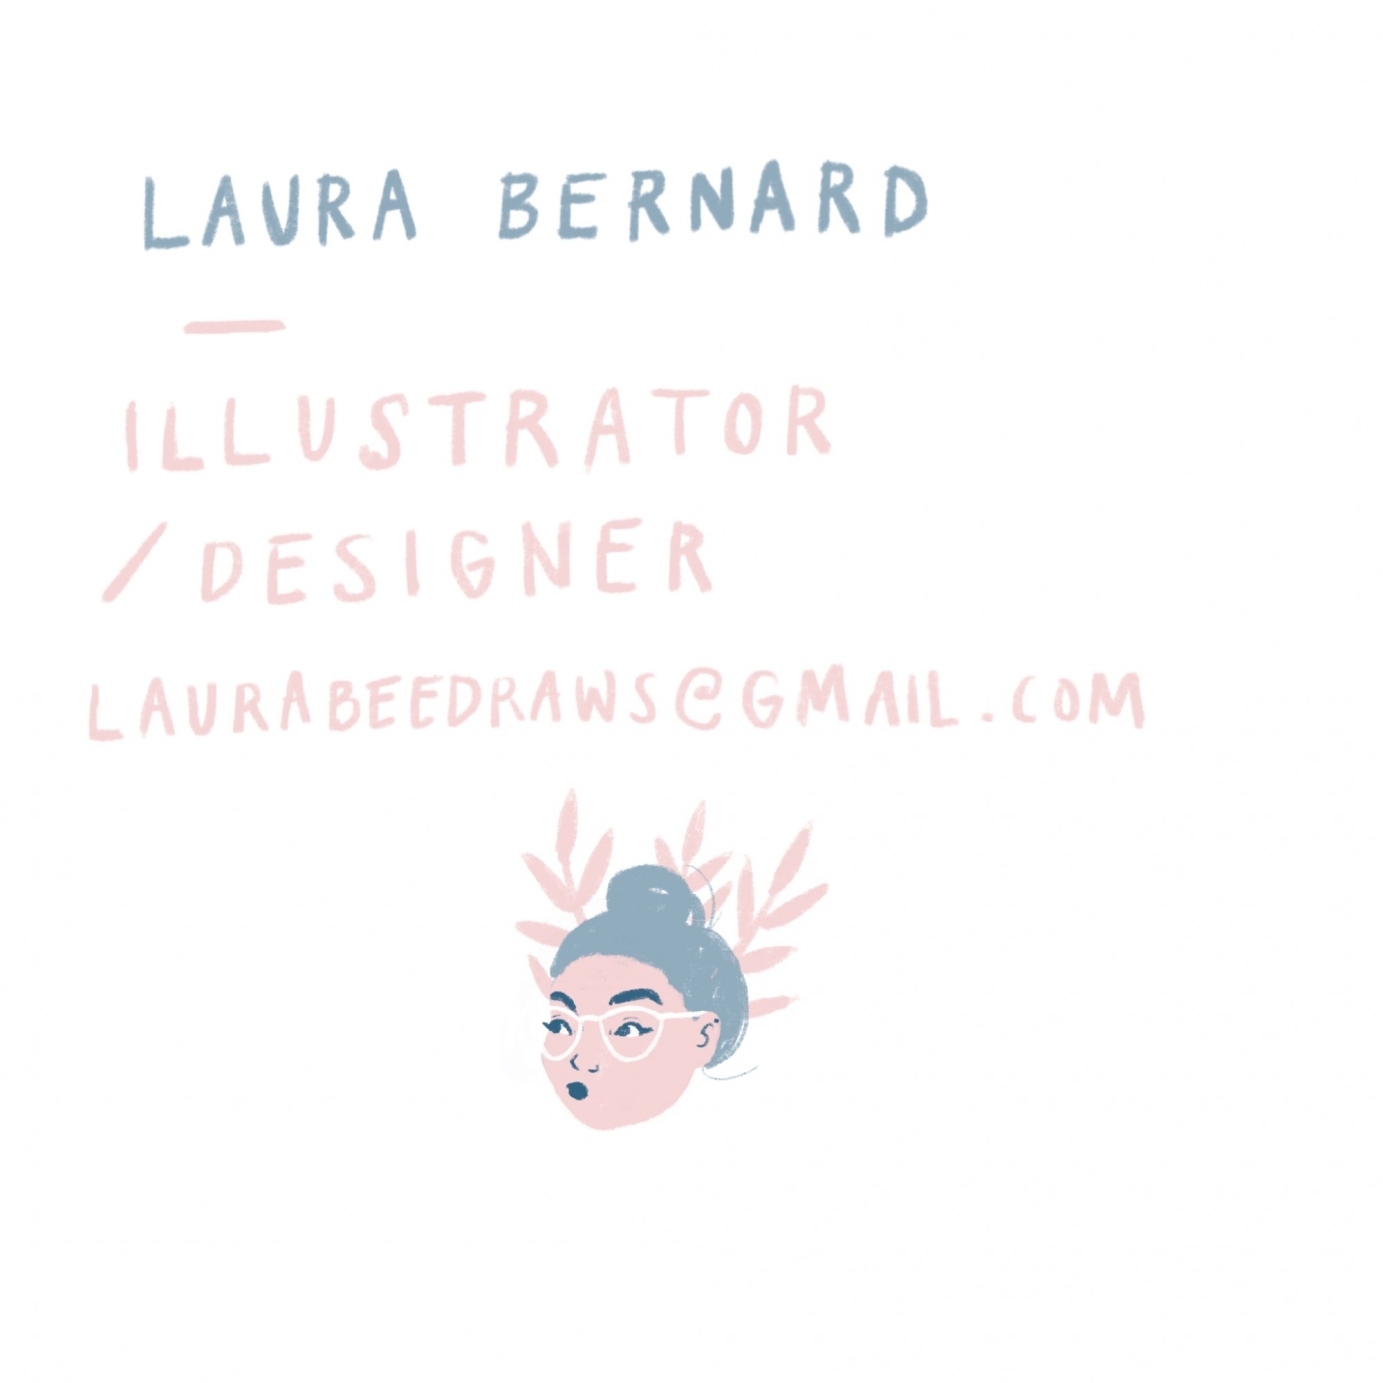 Branding for Laura Bee Draws by LauraBeeDraws